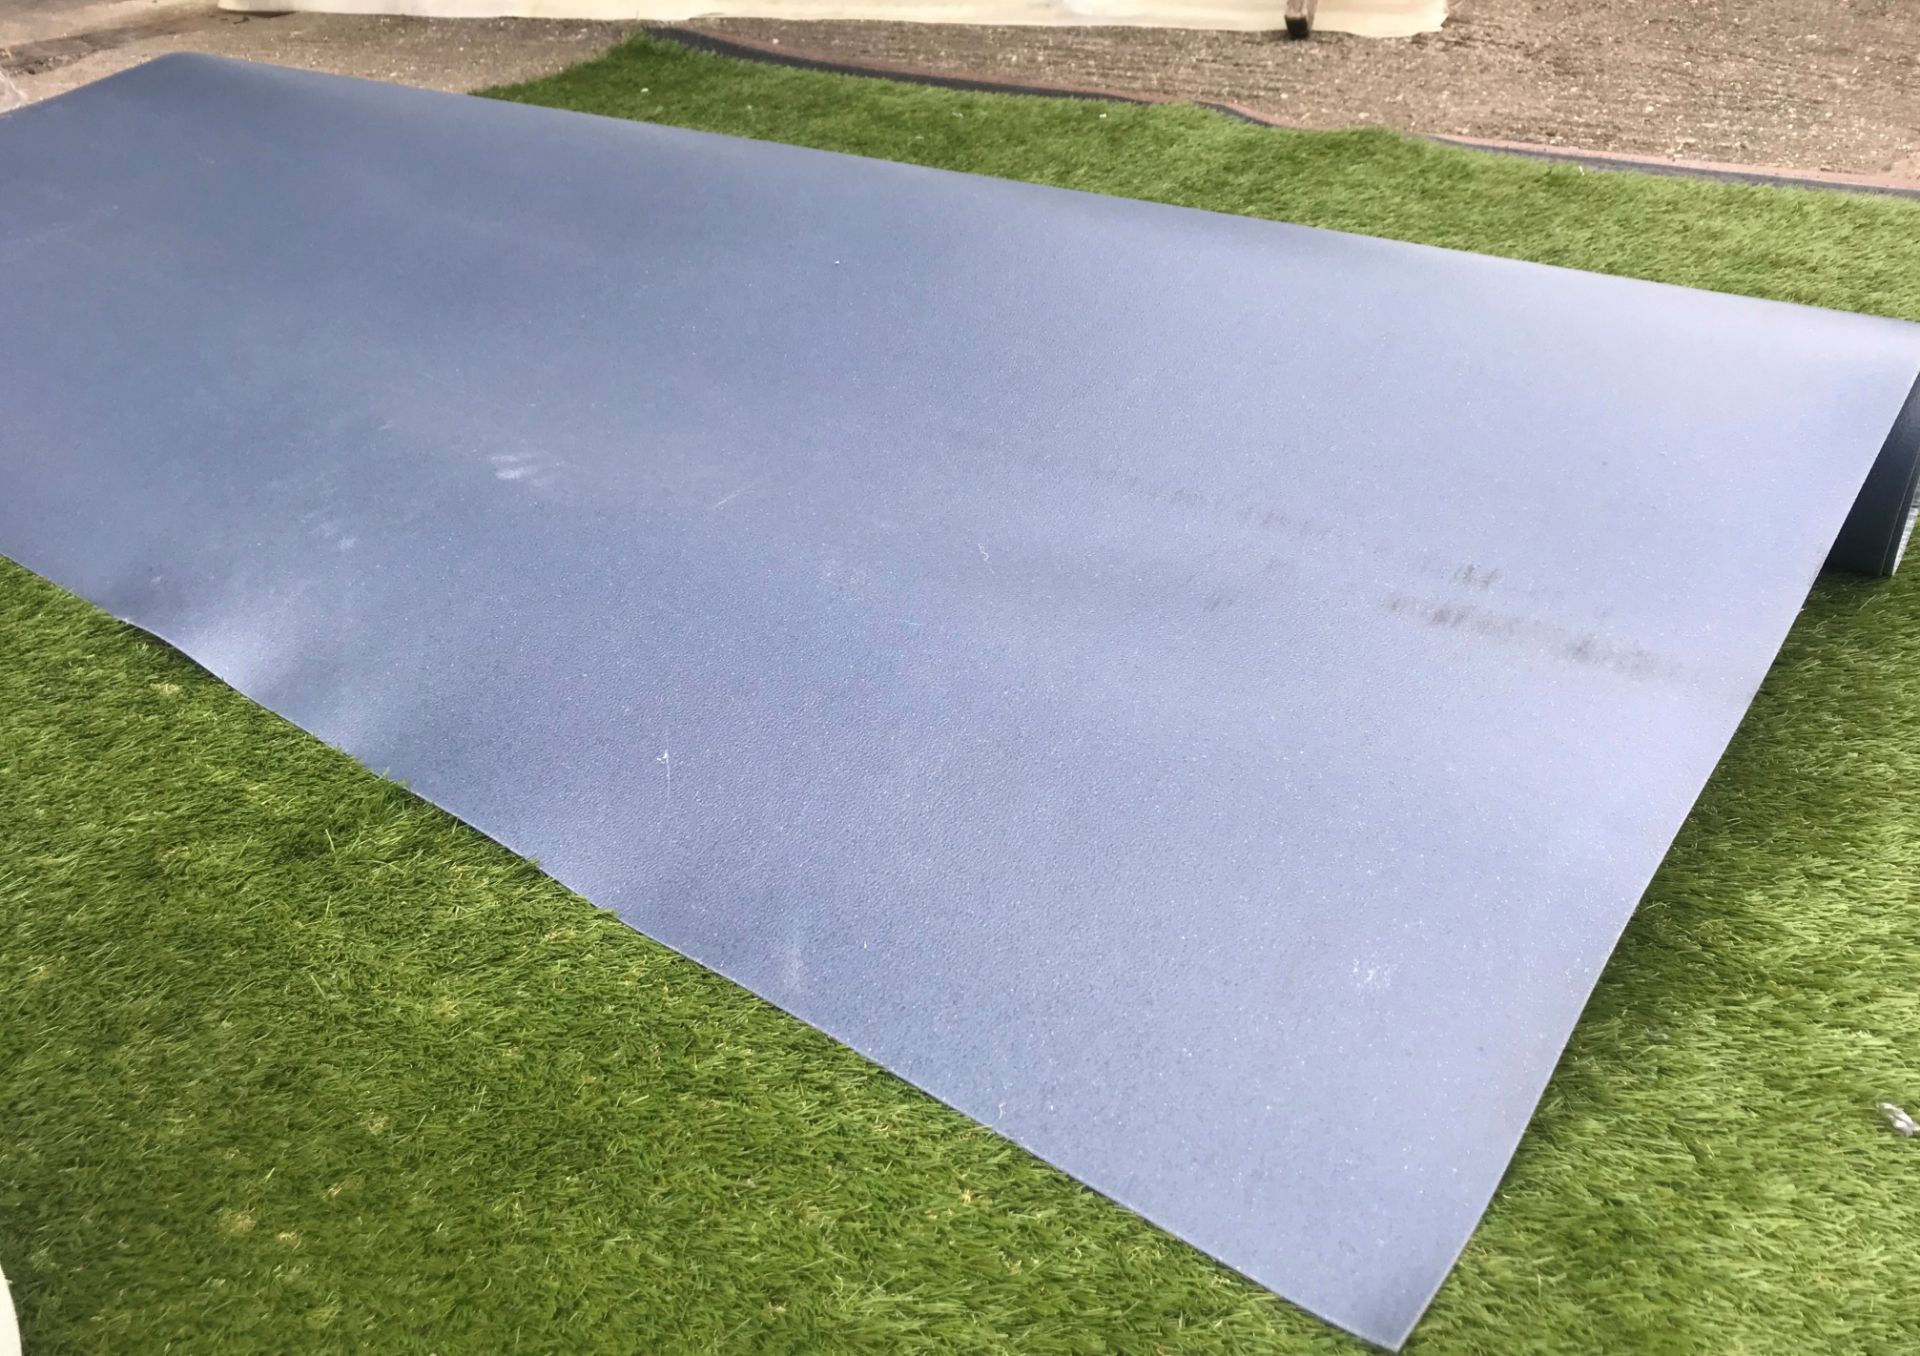 1 x ALTRO Suprema Slip Resistant Vinyl Flooring - Colour: Bluebird - 20X2 Meter Roll - Ref: NWF012 - - Image 2 of 3